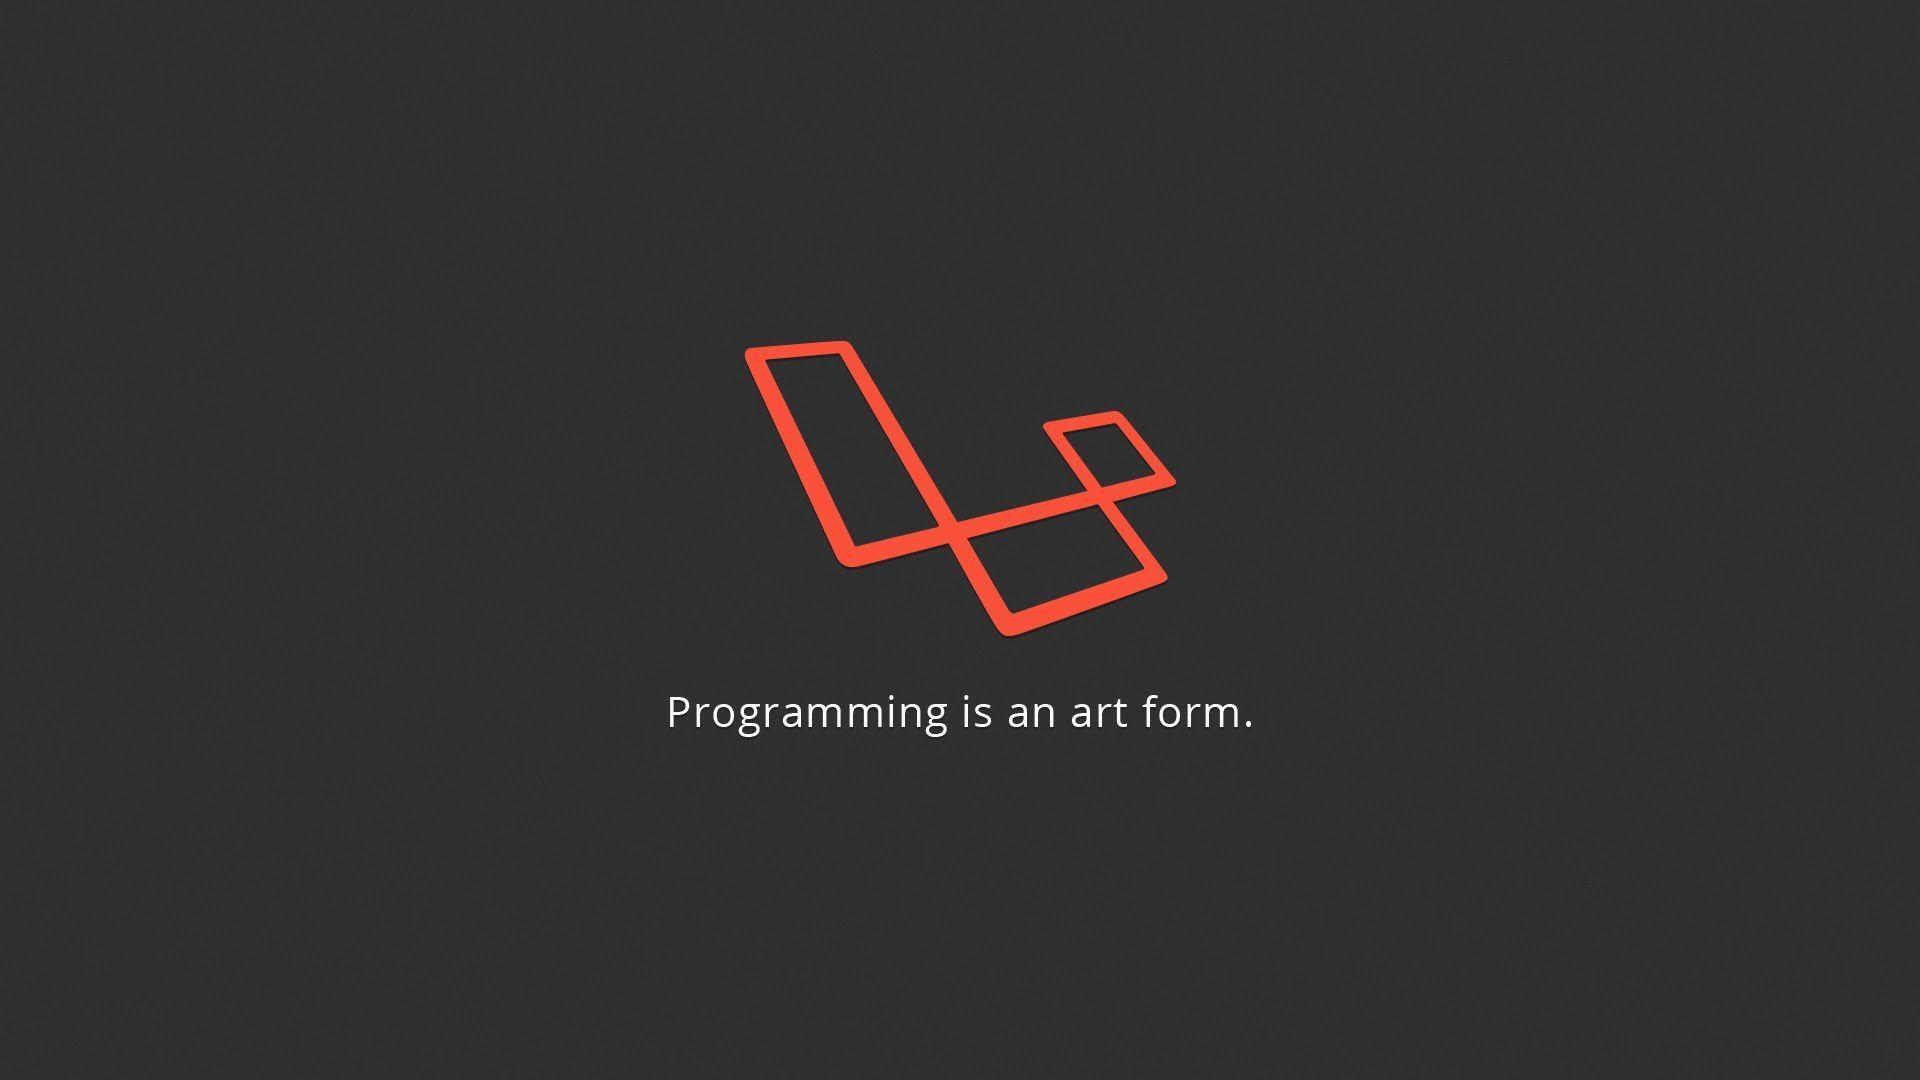 Programming wallpapers for desktop, download free Programming